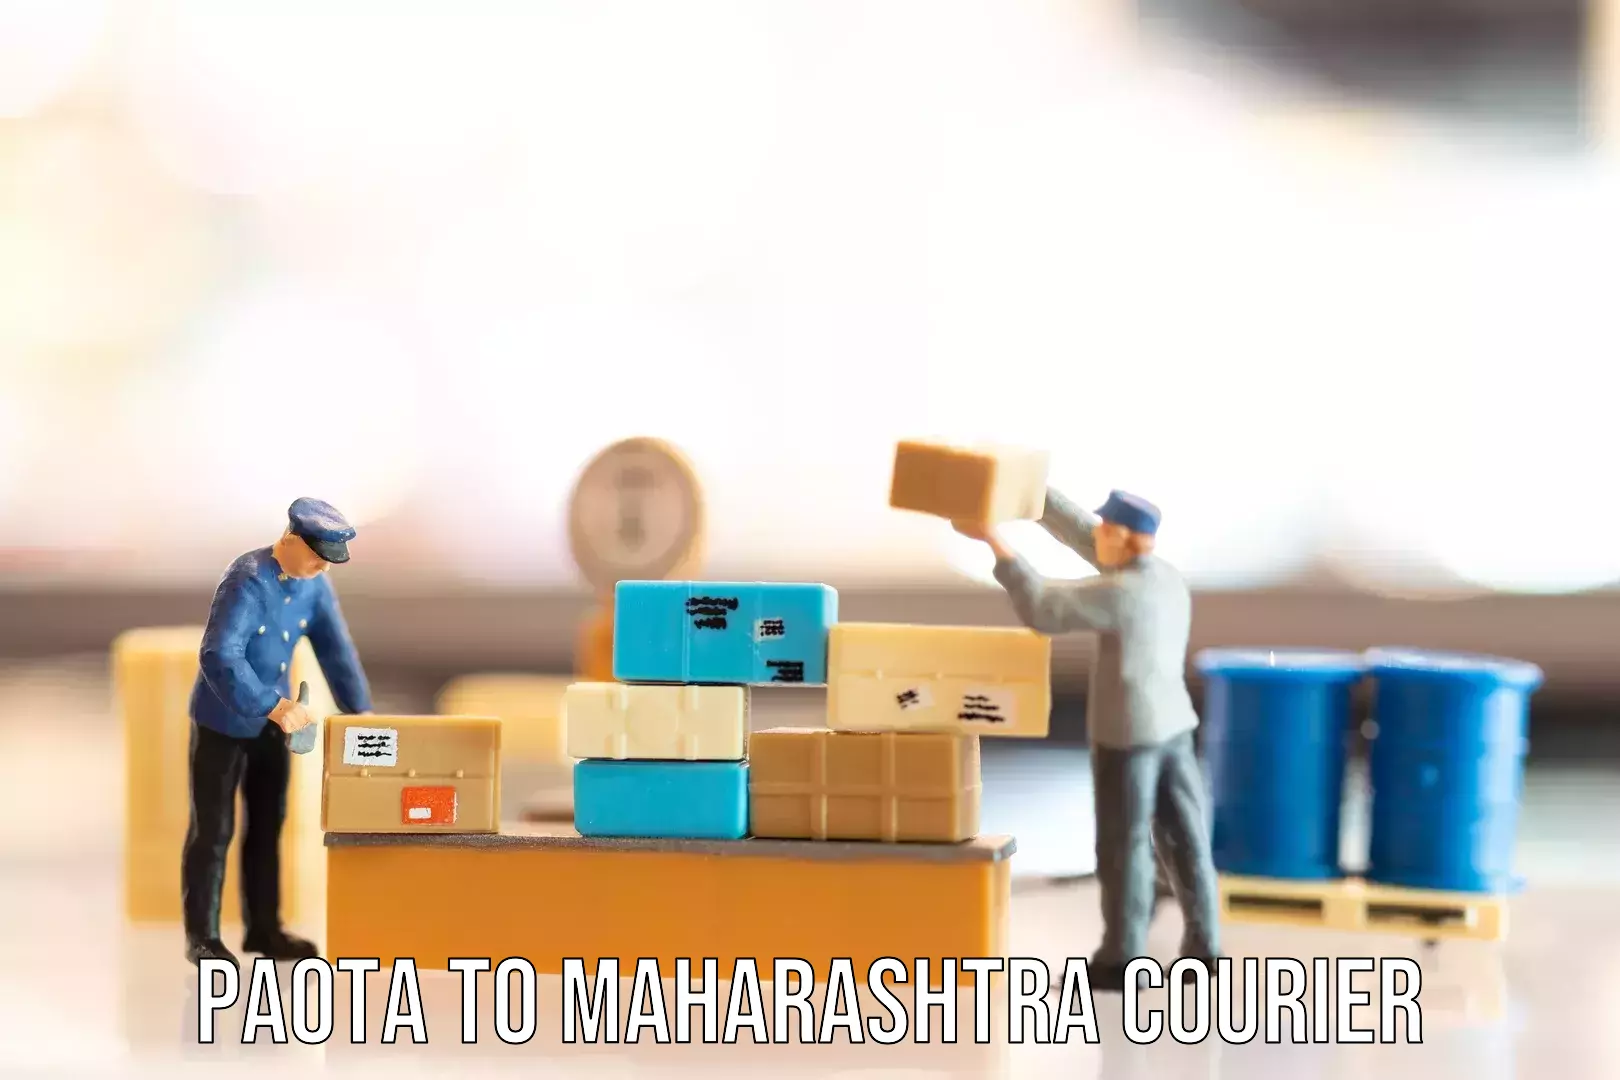 Luggage transport service Paota to Maharashtra